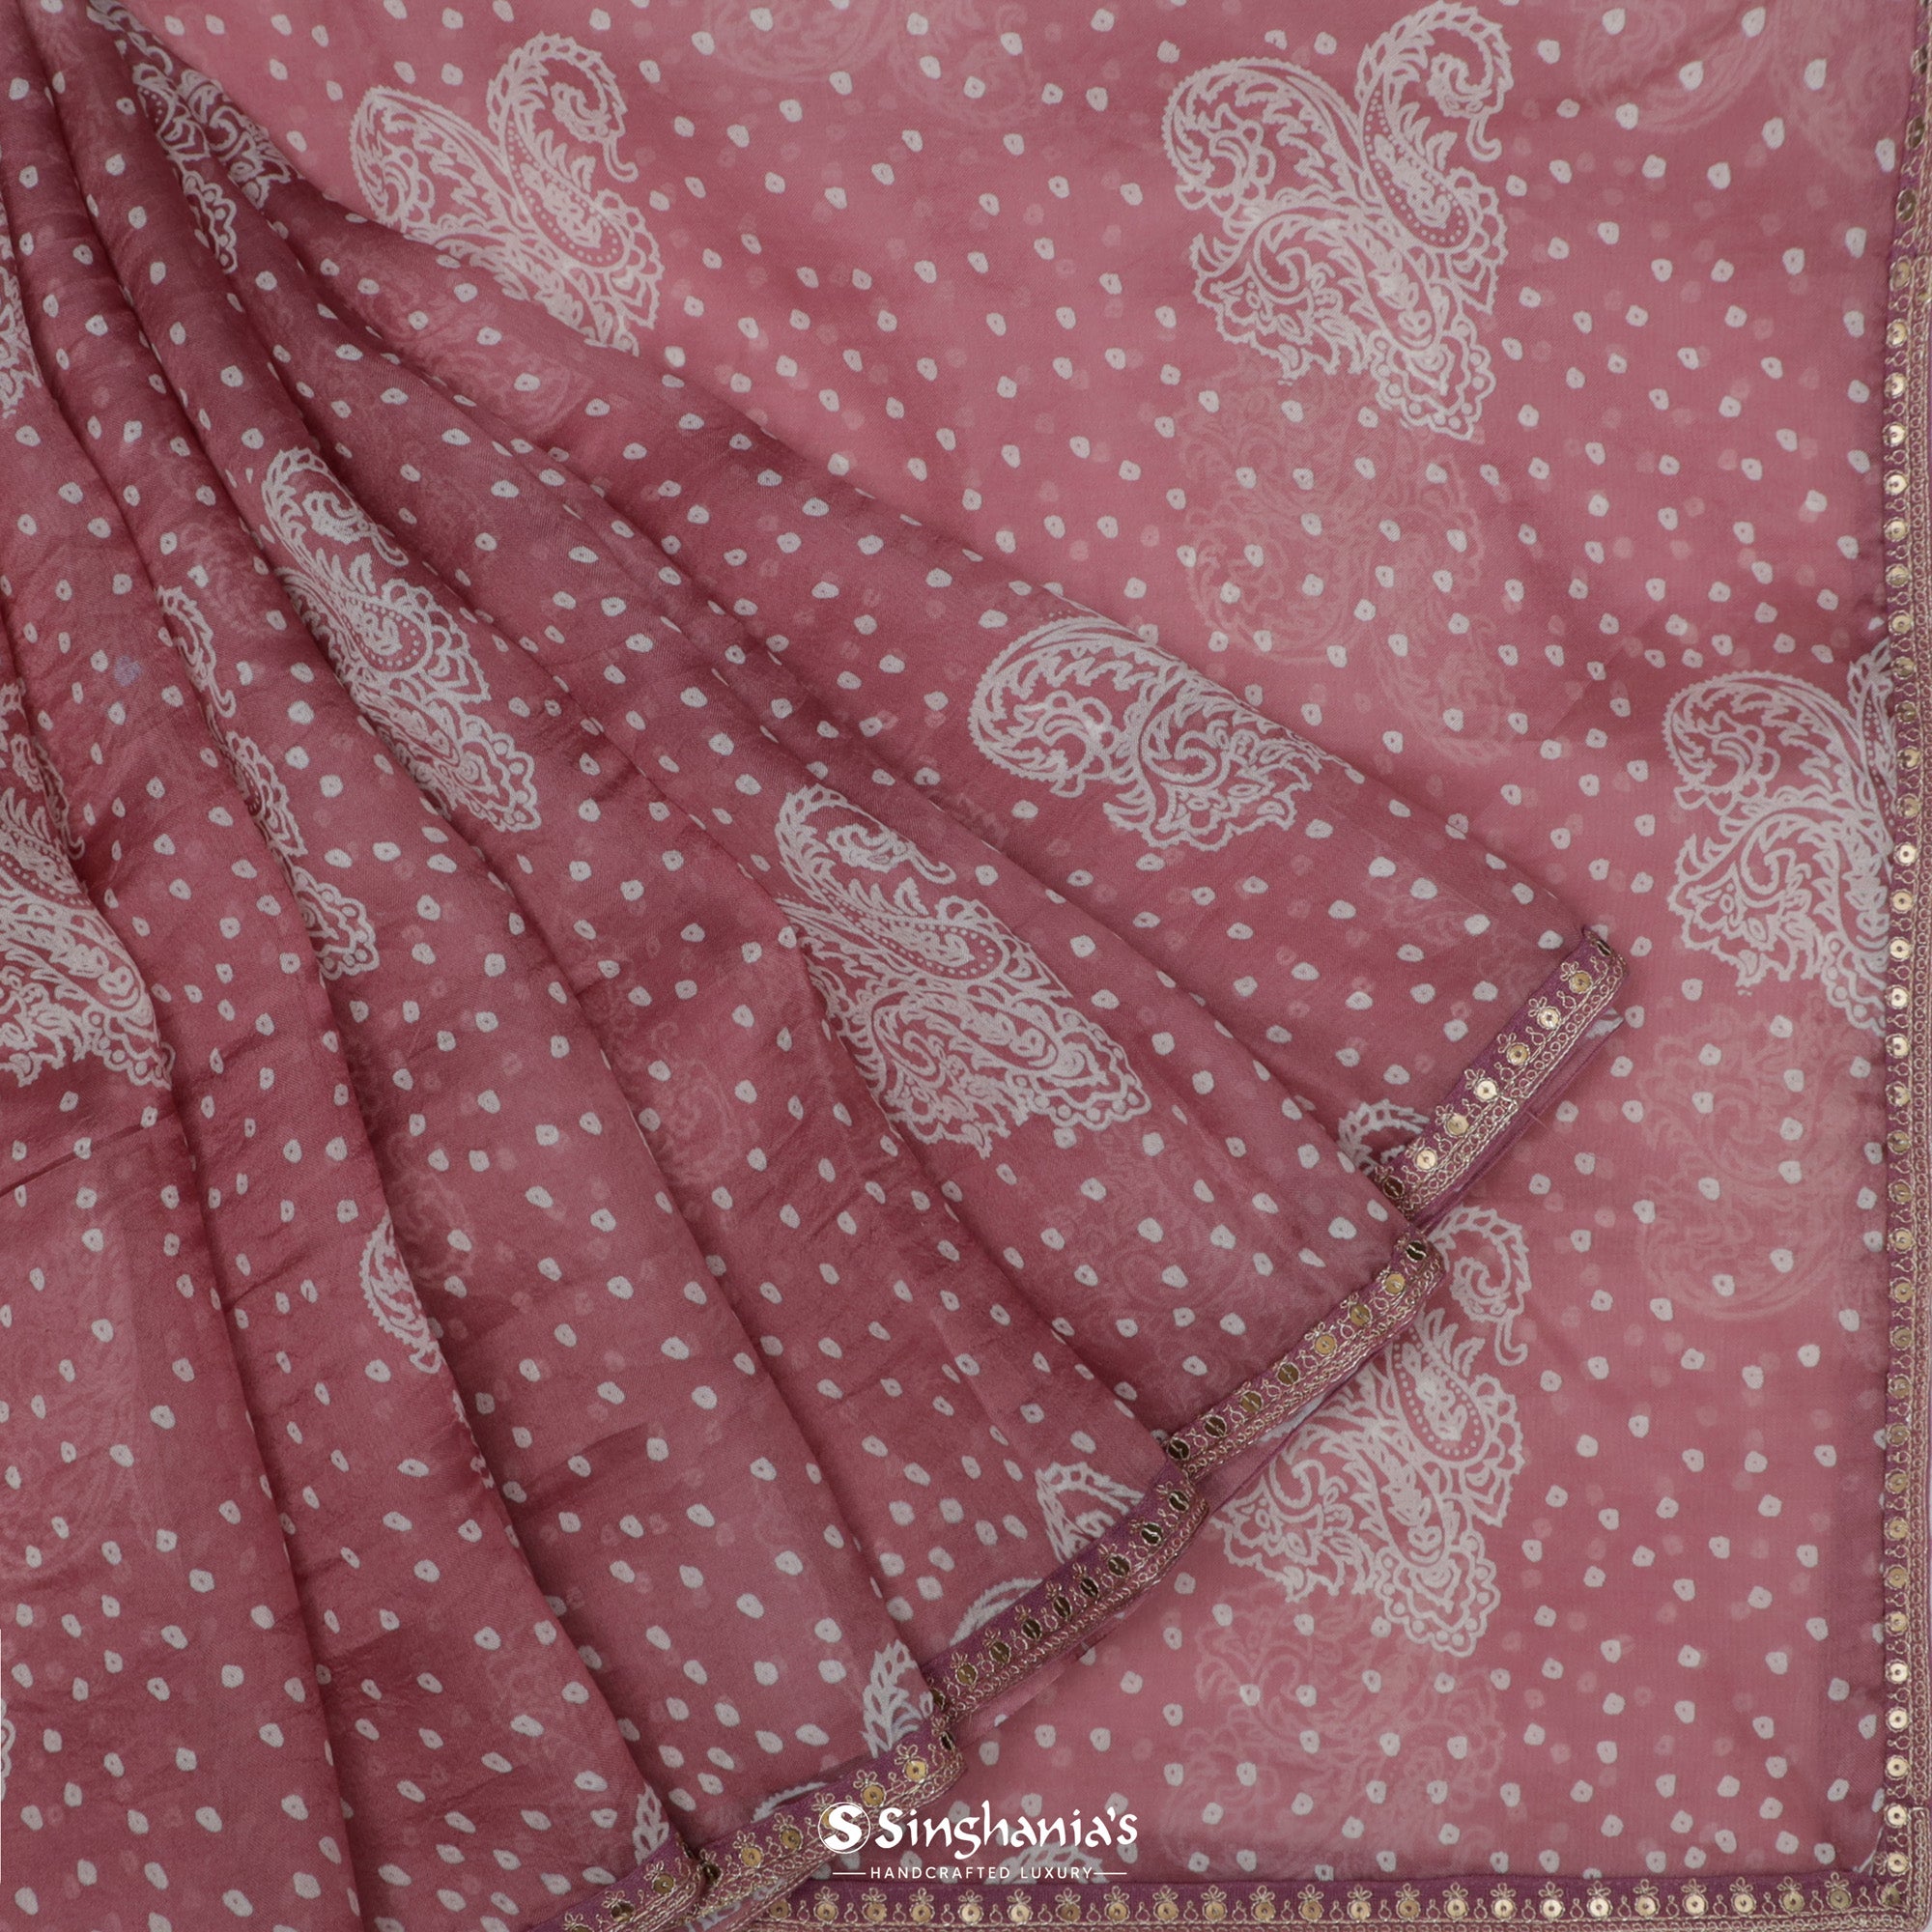 Old Rose Pink Printed Bandhani Organza Saree With Paisley-Butti Pattern